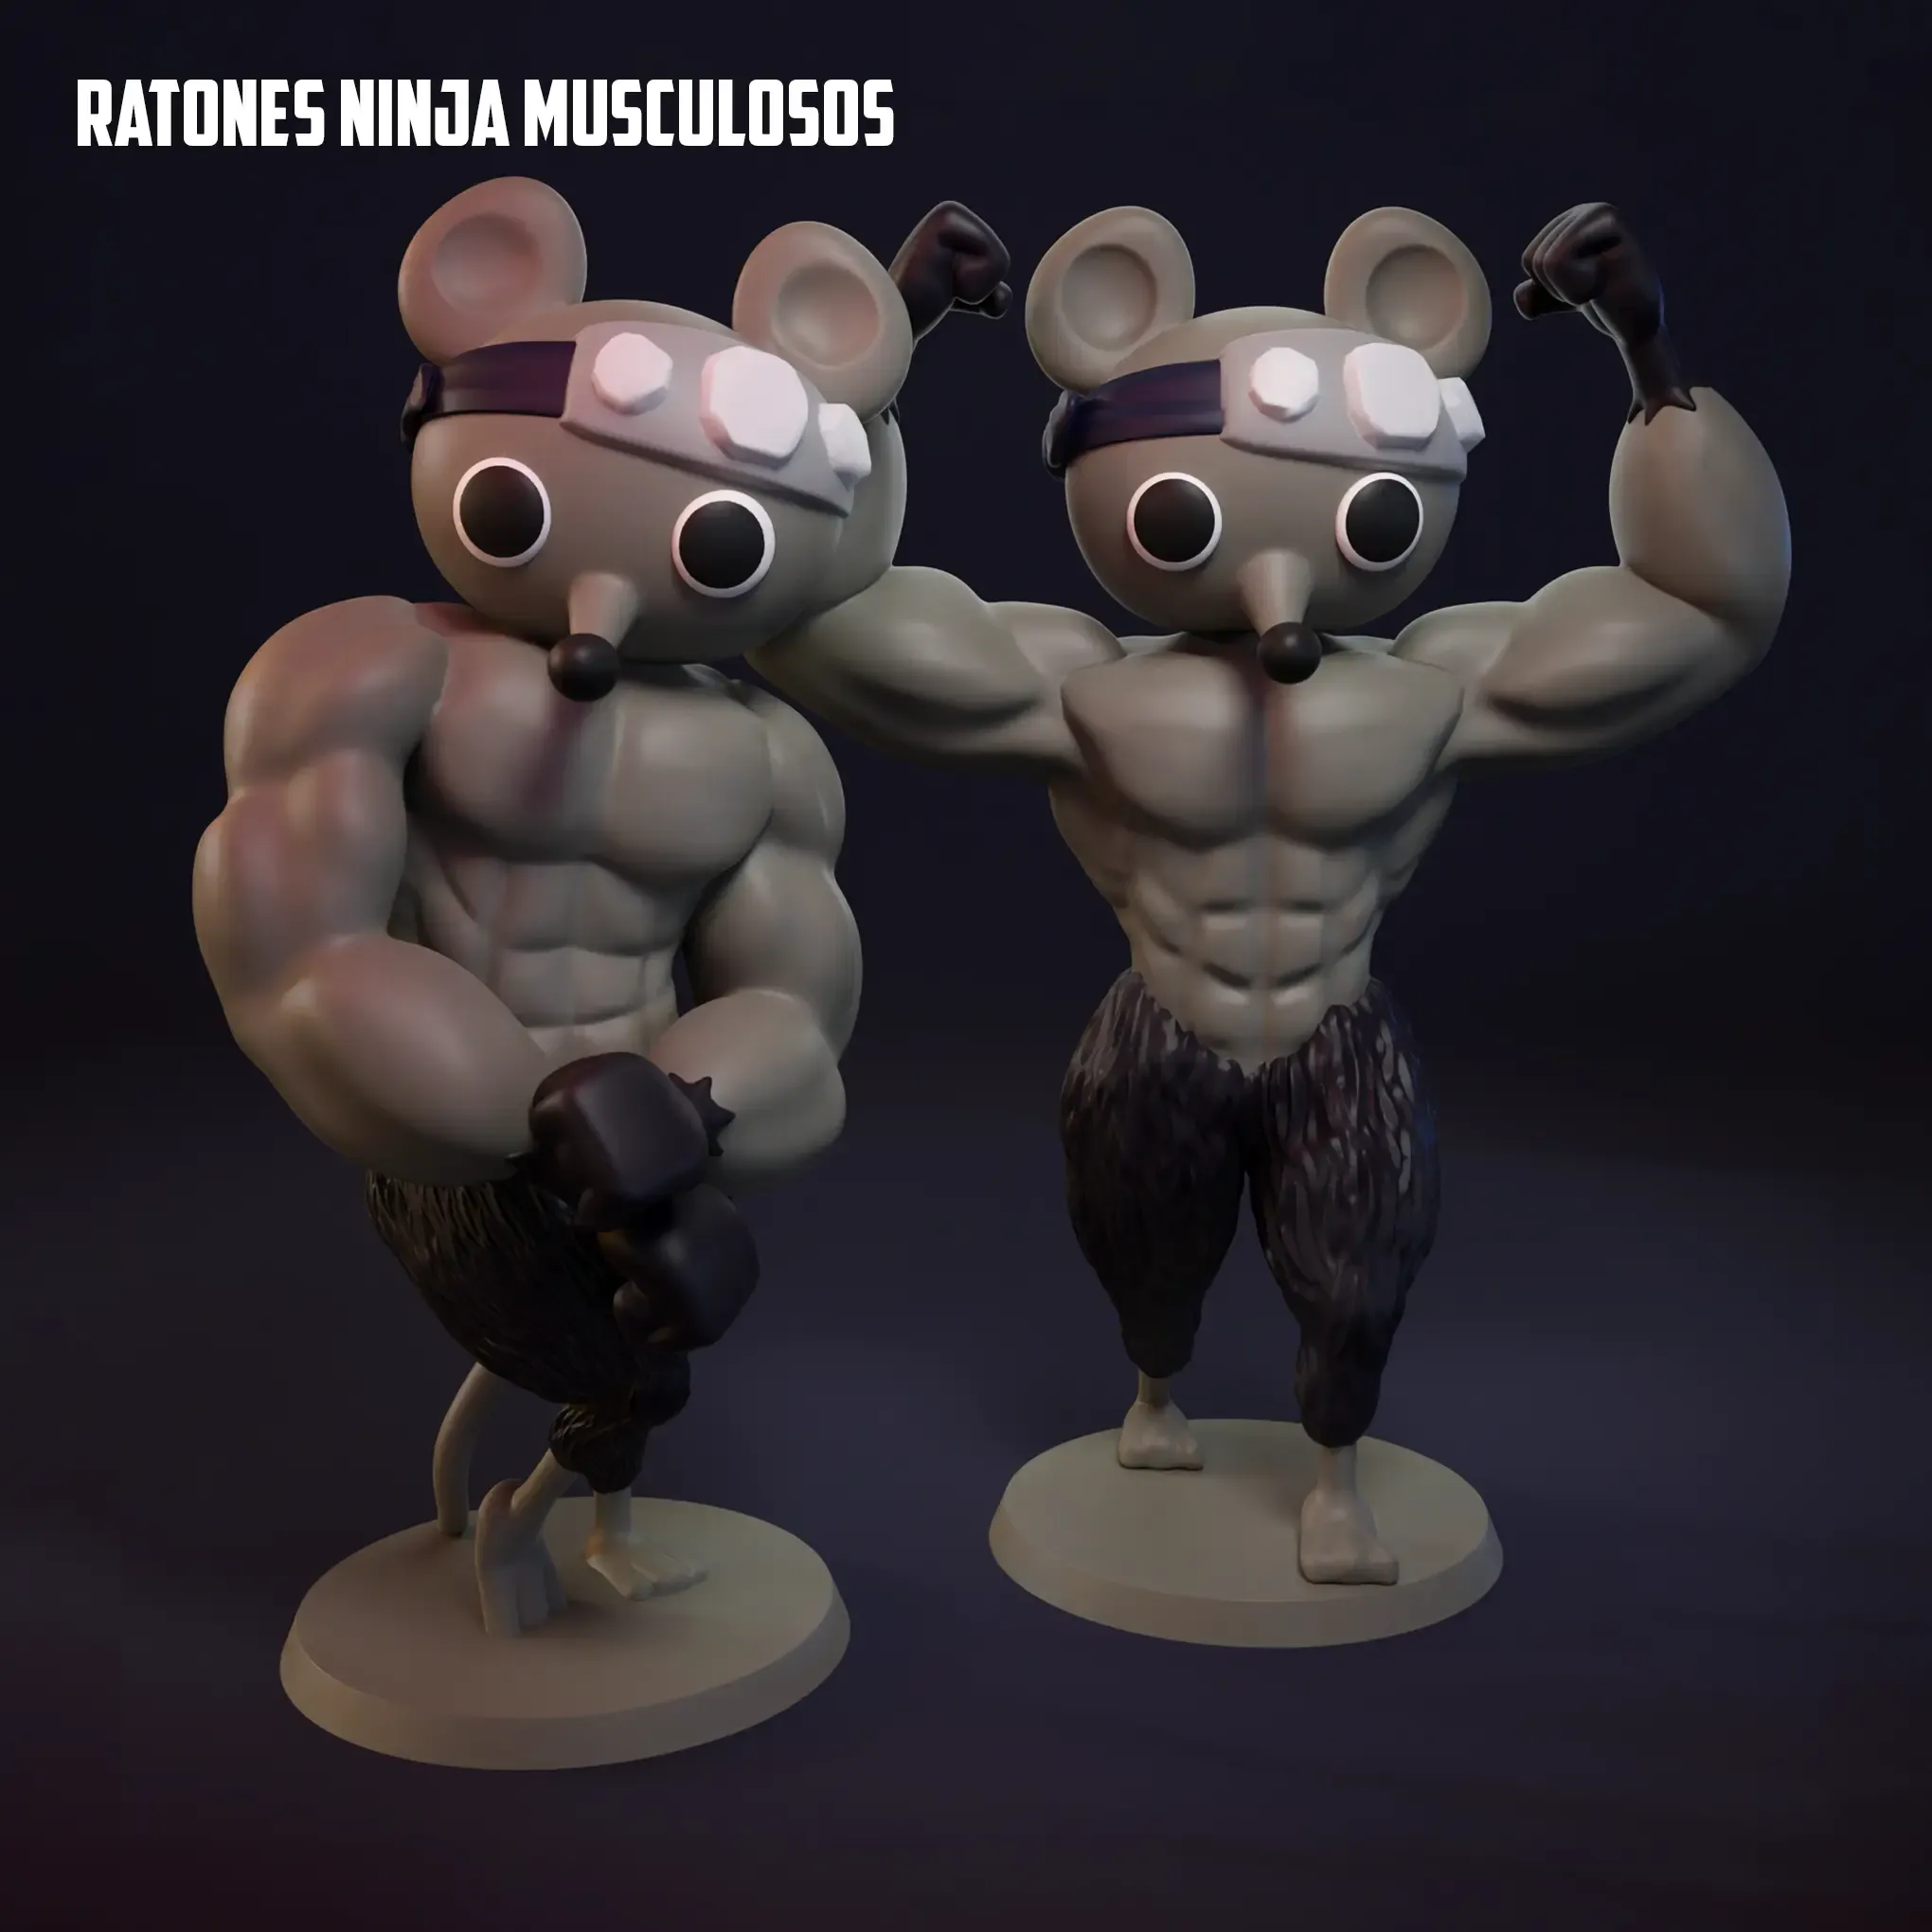 Ratones Ninjas Musculosos / Kimetsu no Yaiba